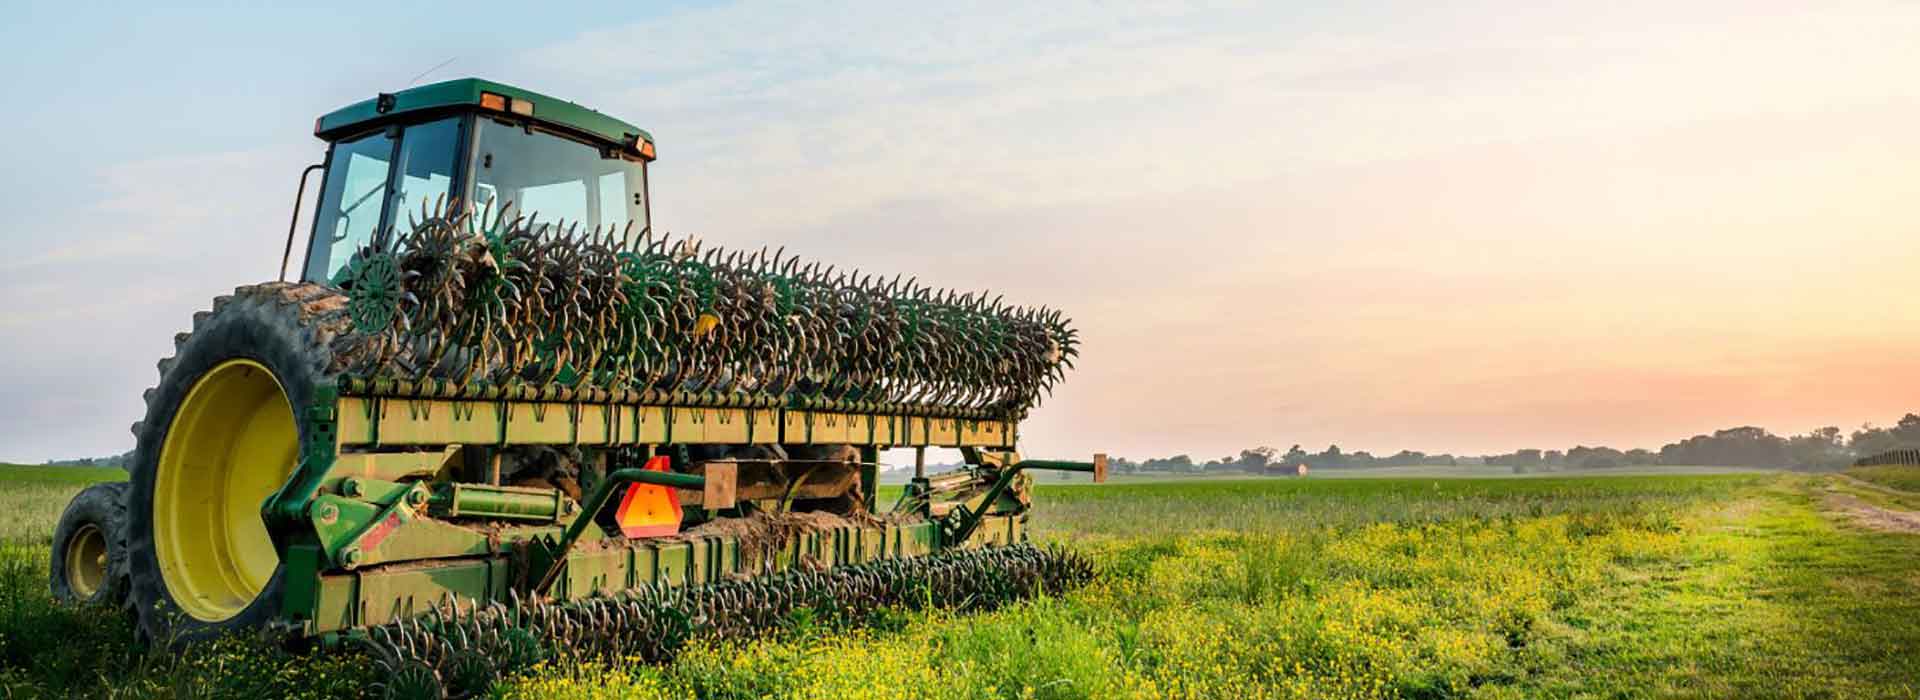 Farm Tractor in a Field